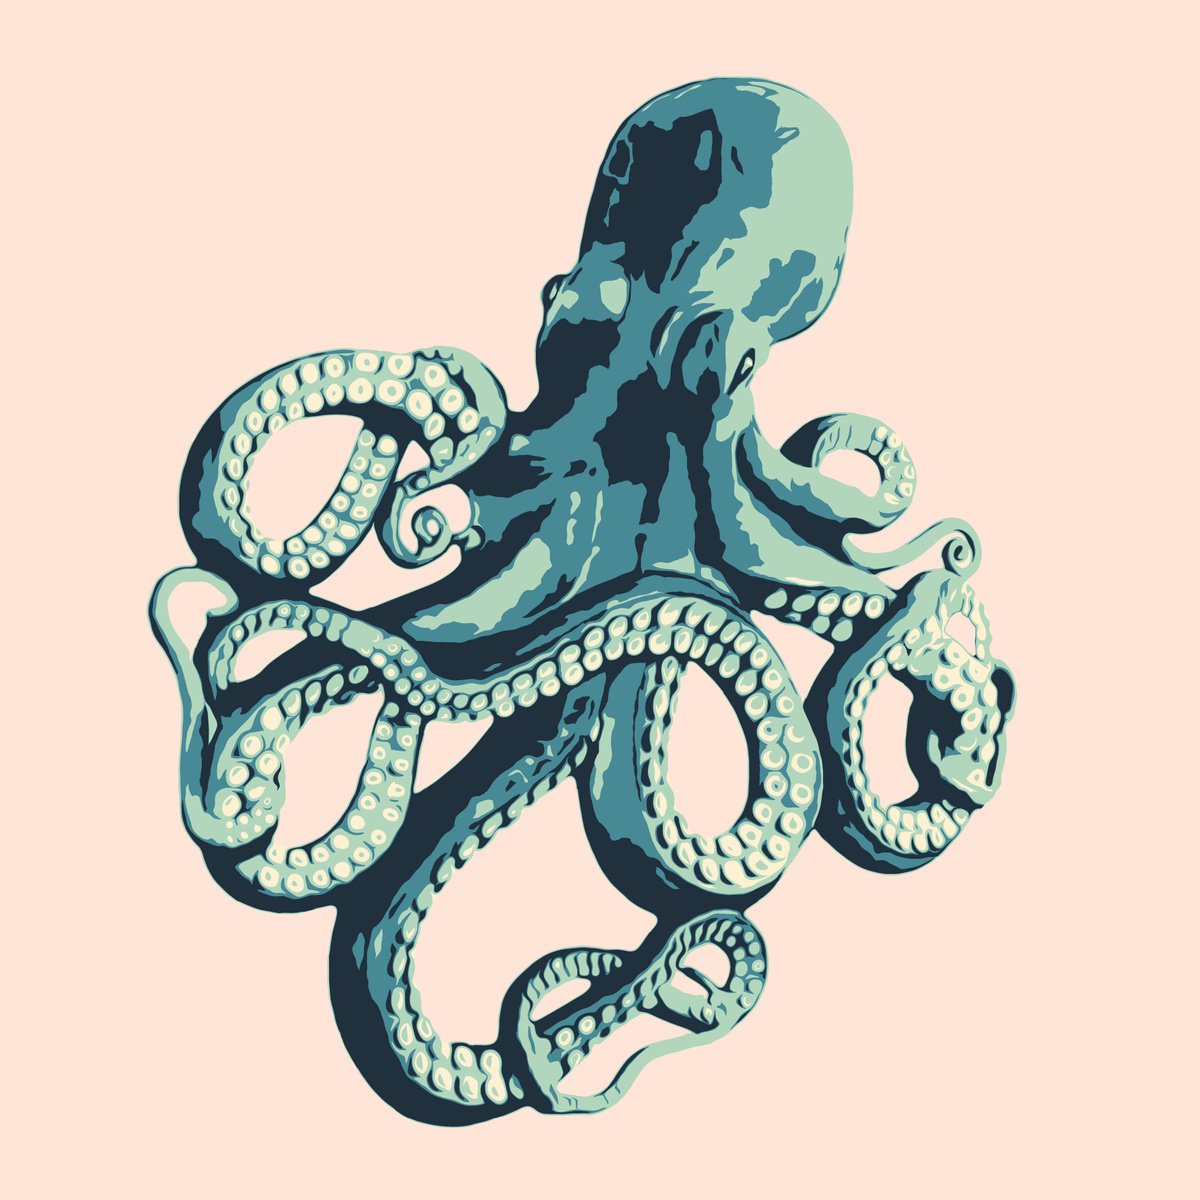 Octopus by Kosta Morr